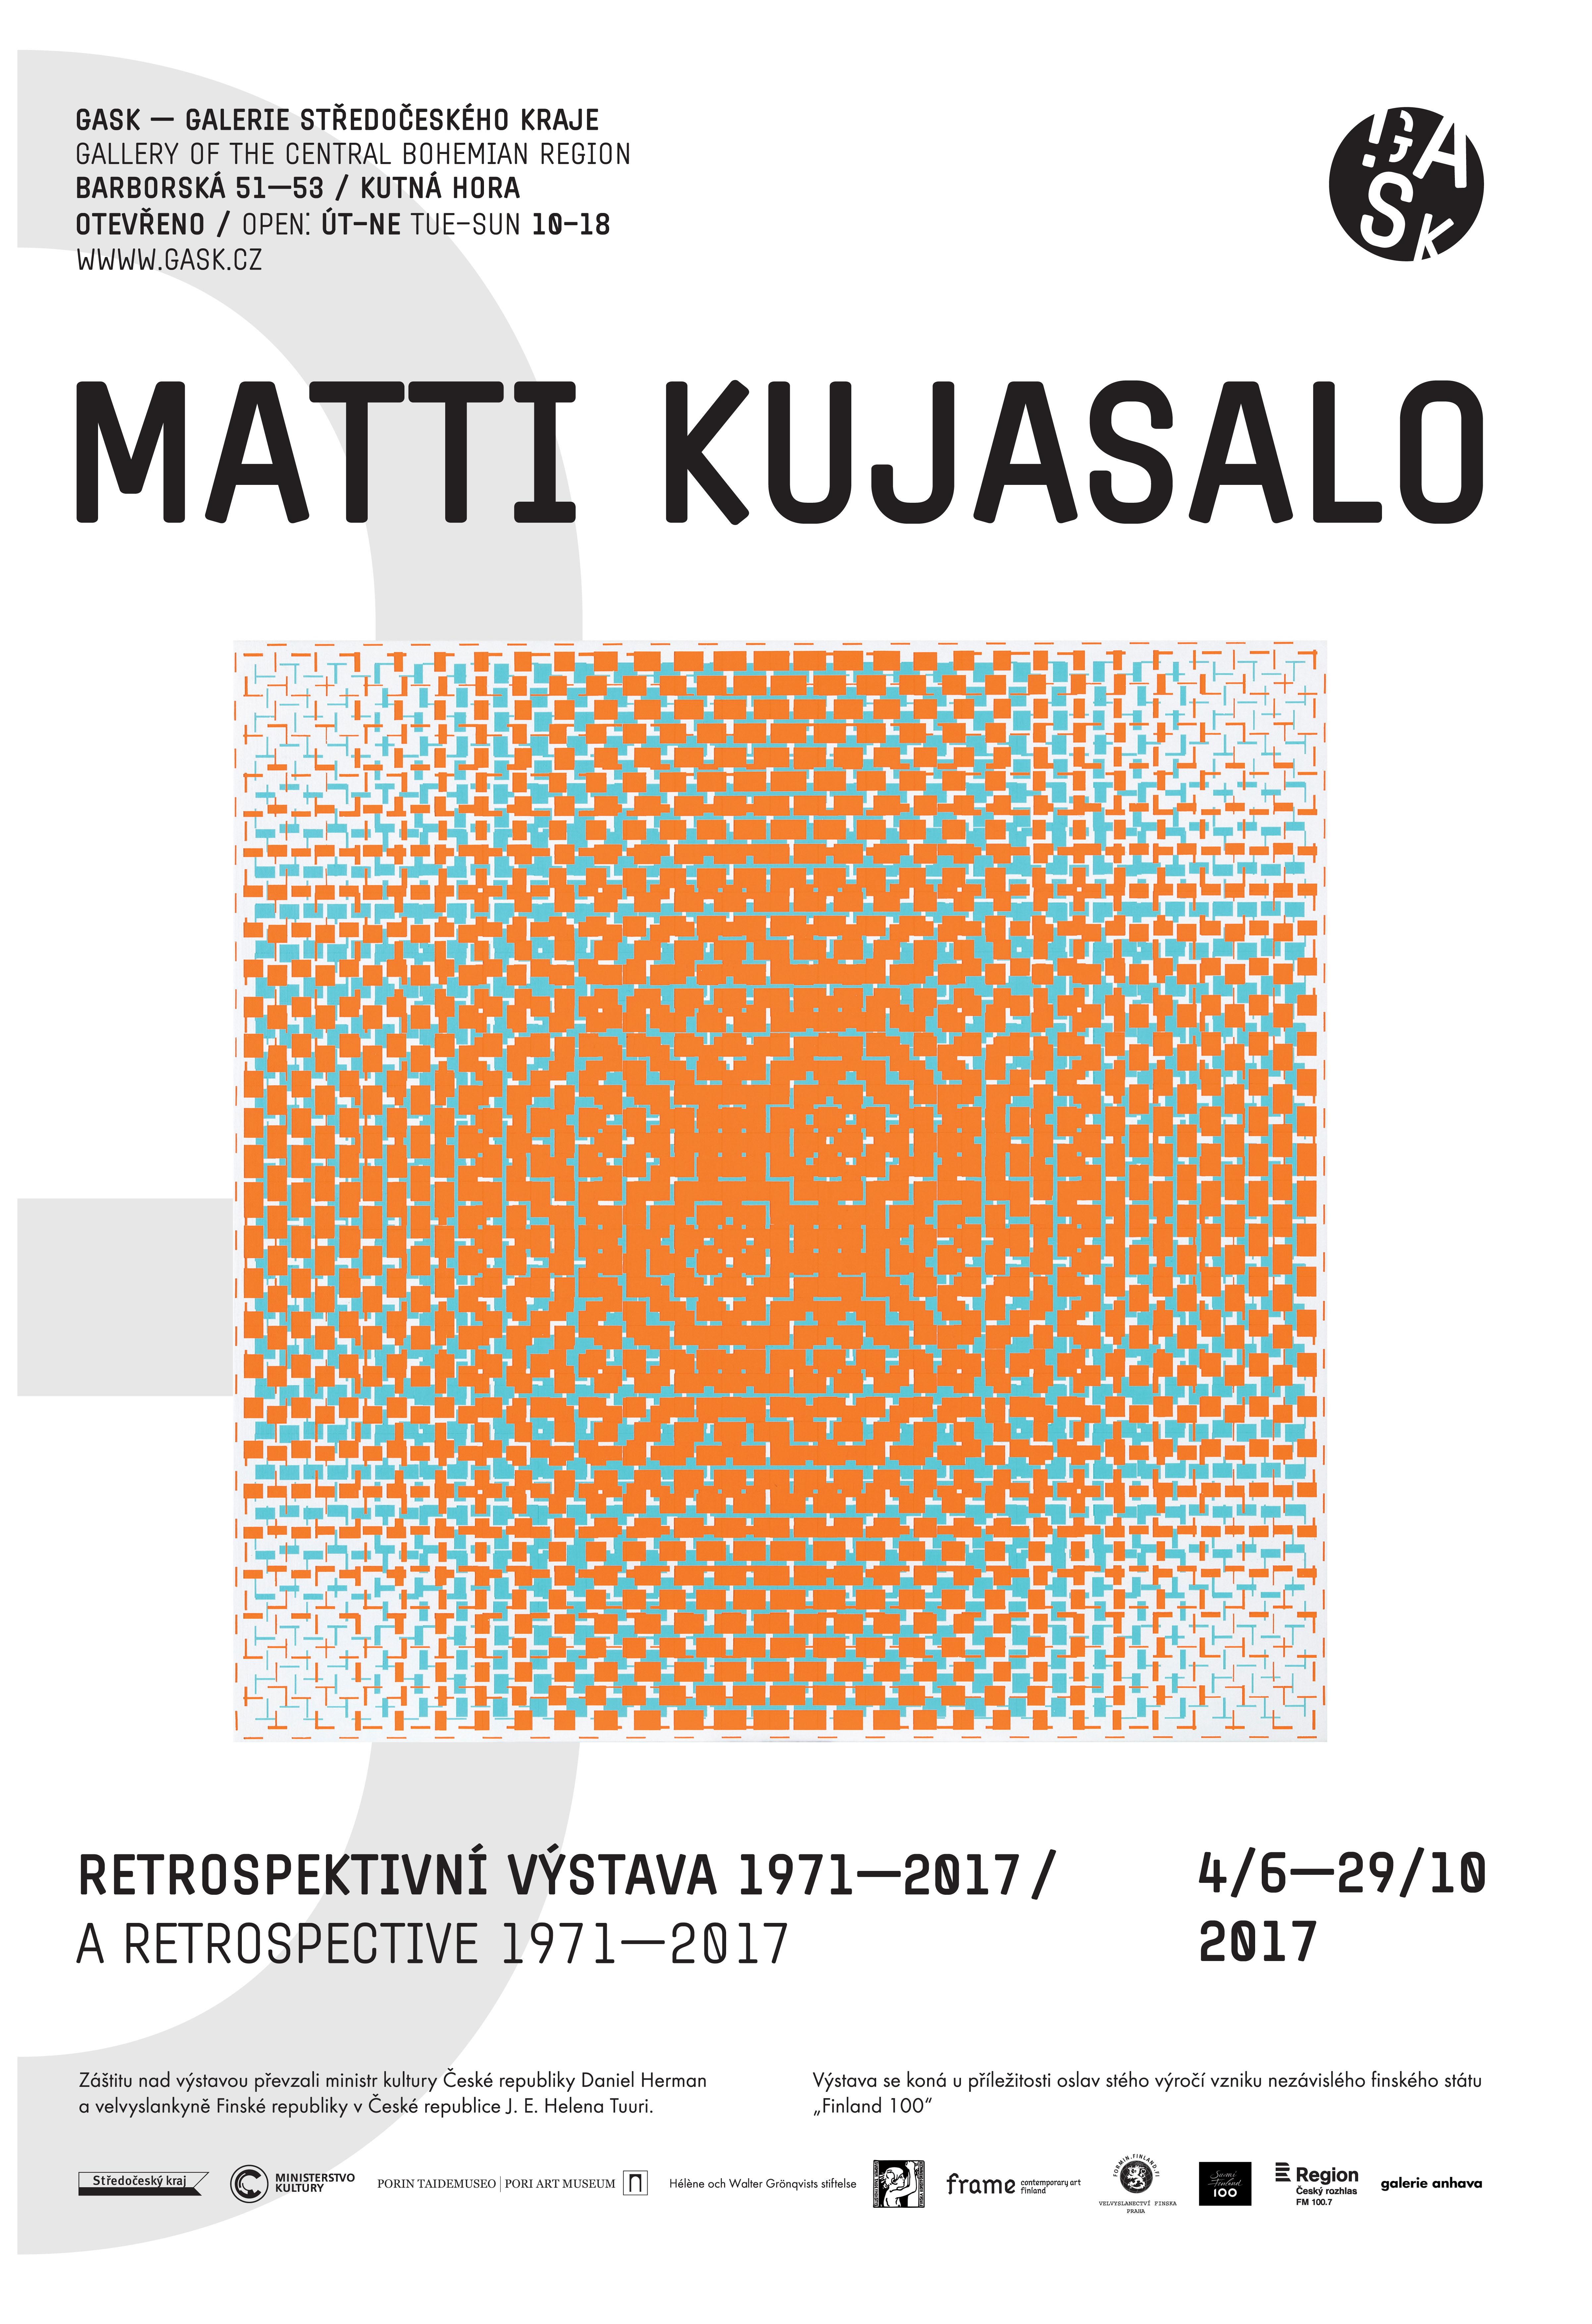 1953-matti-kujasalo-retrospektivni-vystava-1971-2017.jpg